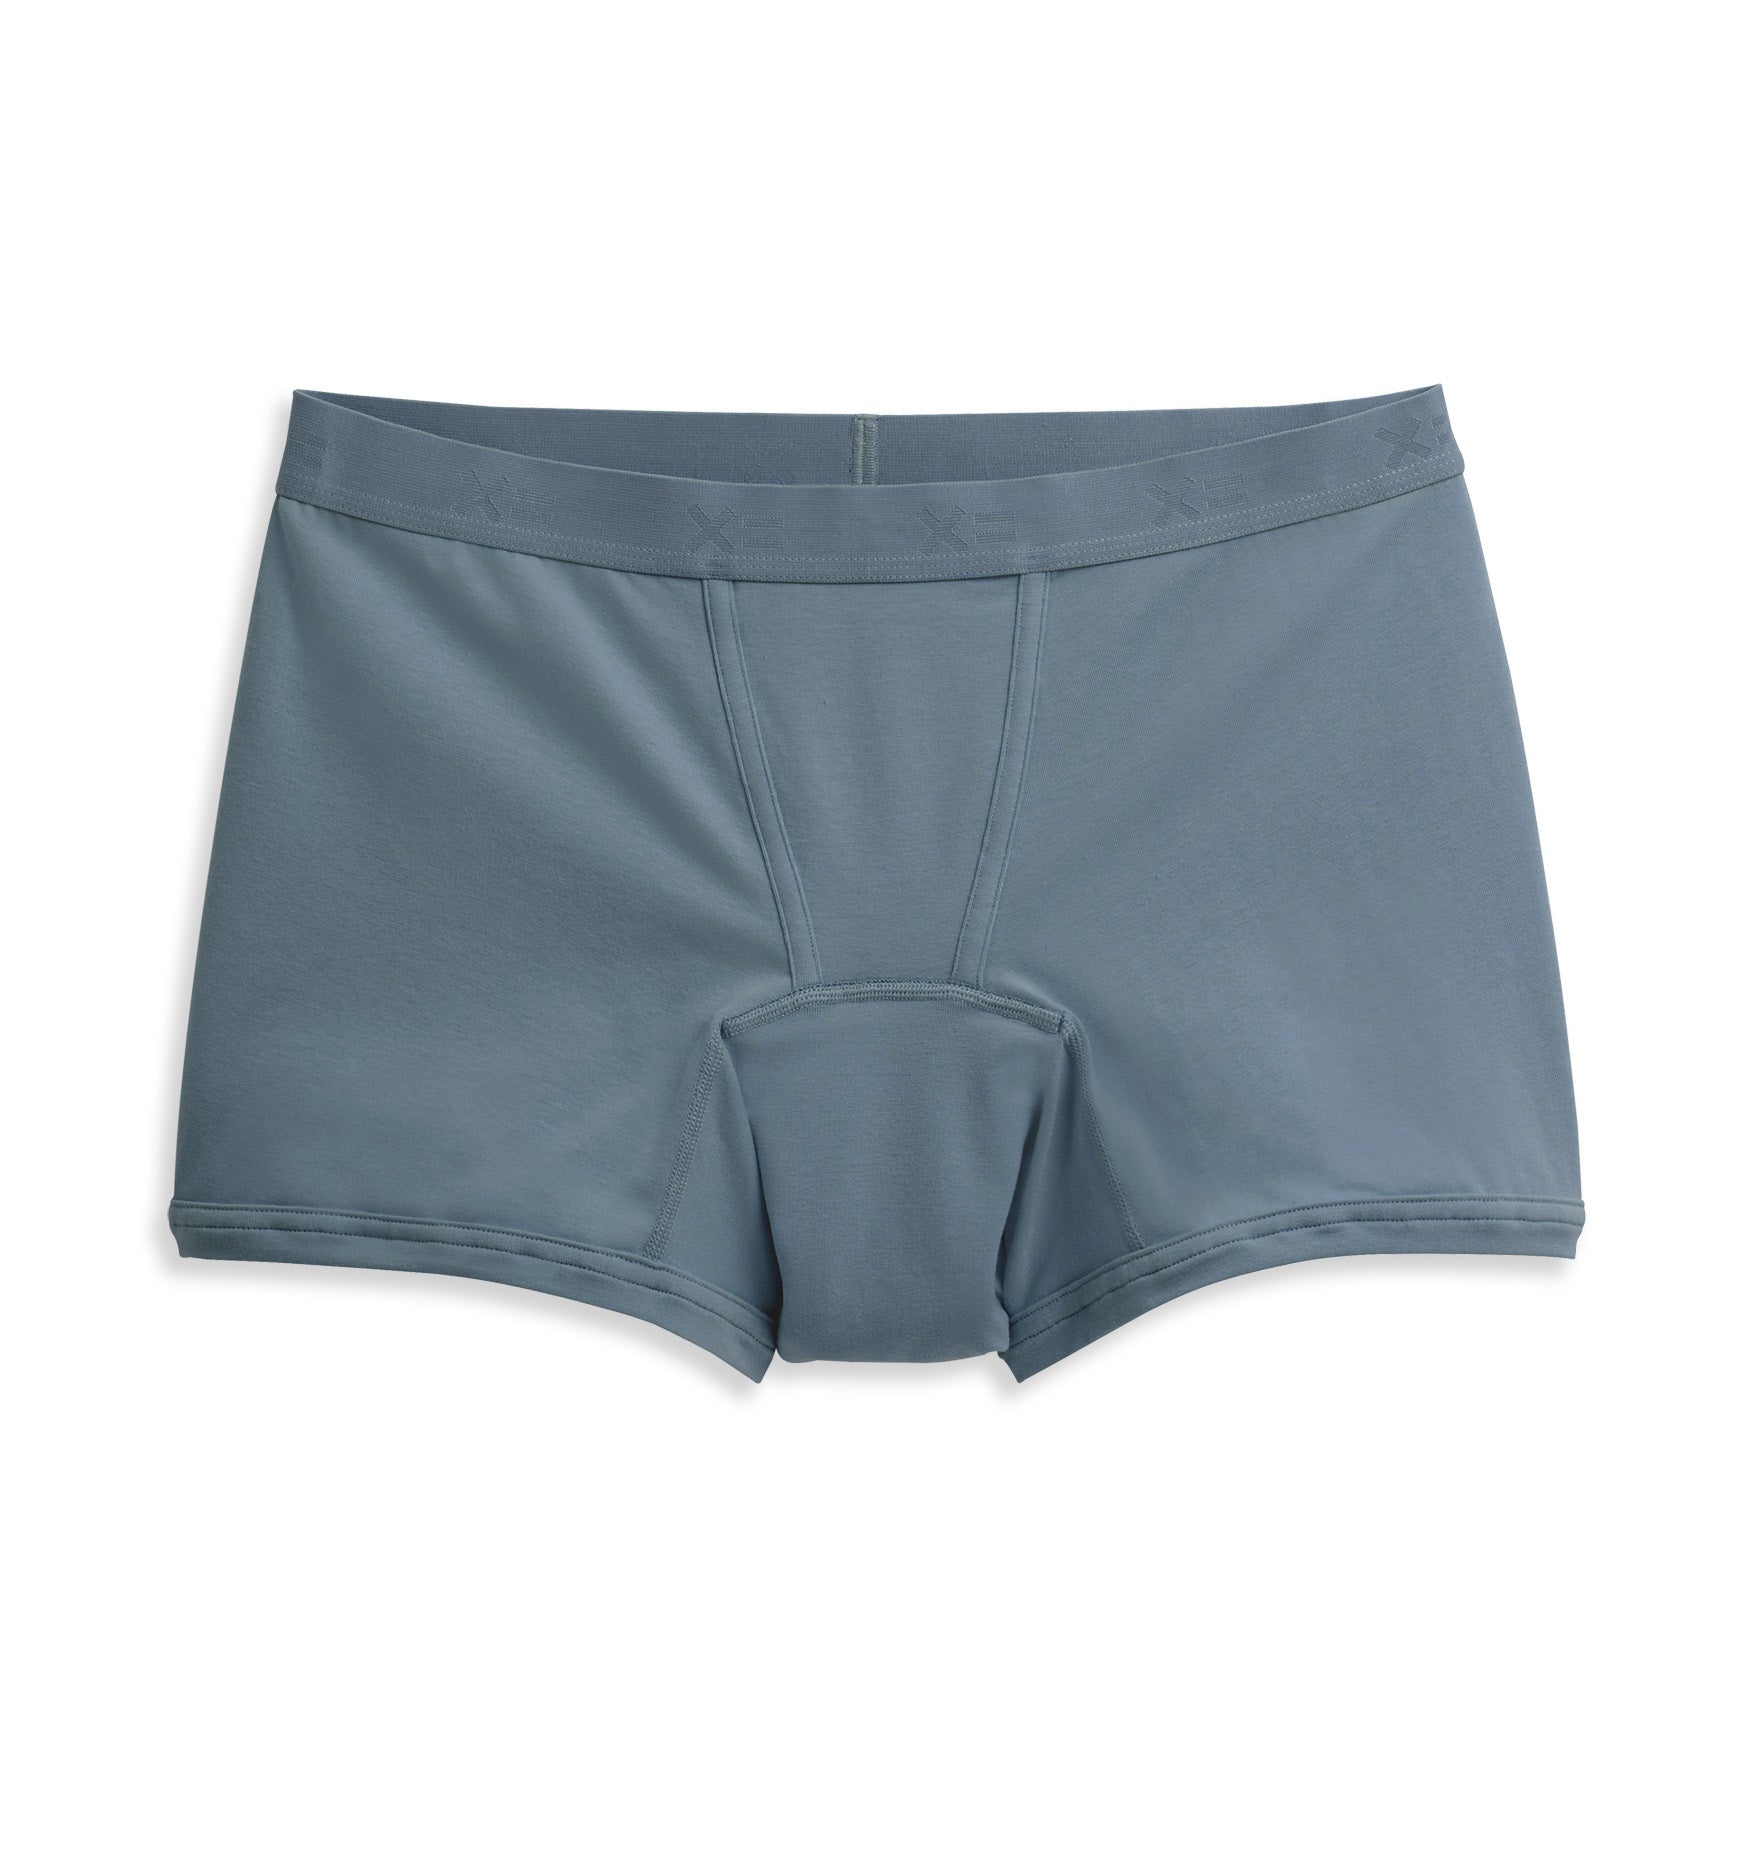 Boyshort Period Underwear For Women, Period Panties, FSA HSA Approved  Feminine Care, Menstrual Underwear Holds 4 Tampons, Navy, 4X